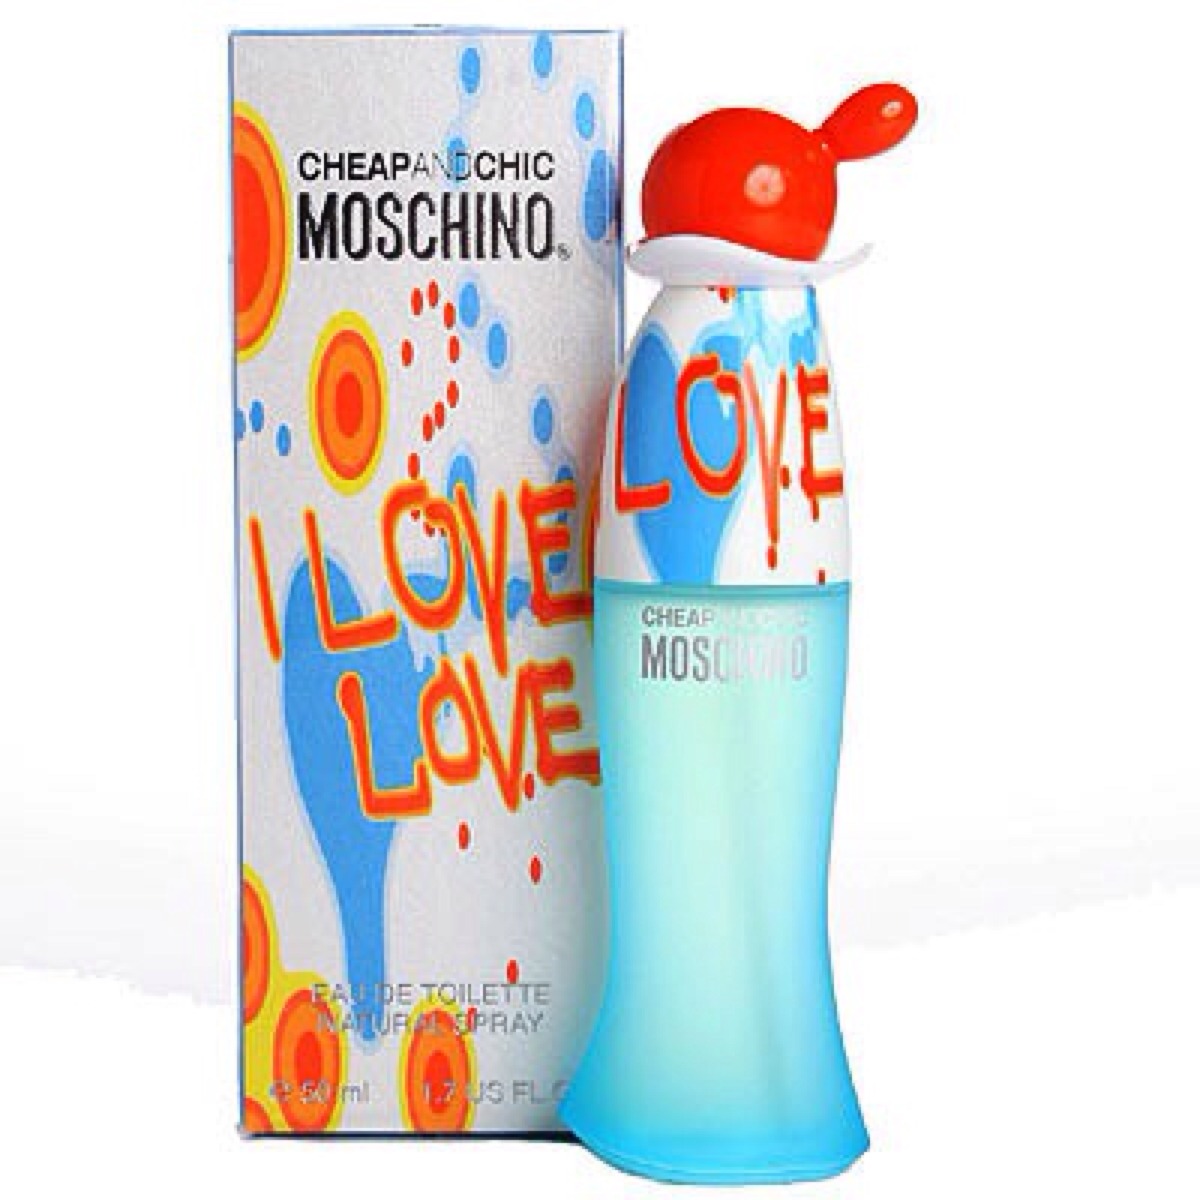 Moschino Cheap And Chic I Love Love Para Dama Envío Gratis - $ 700.00